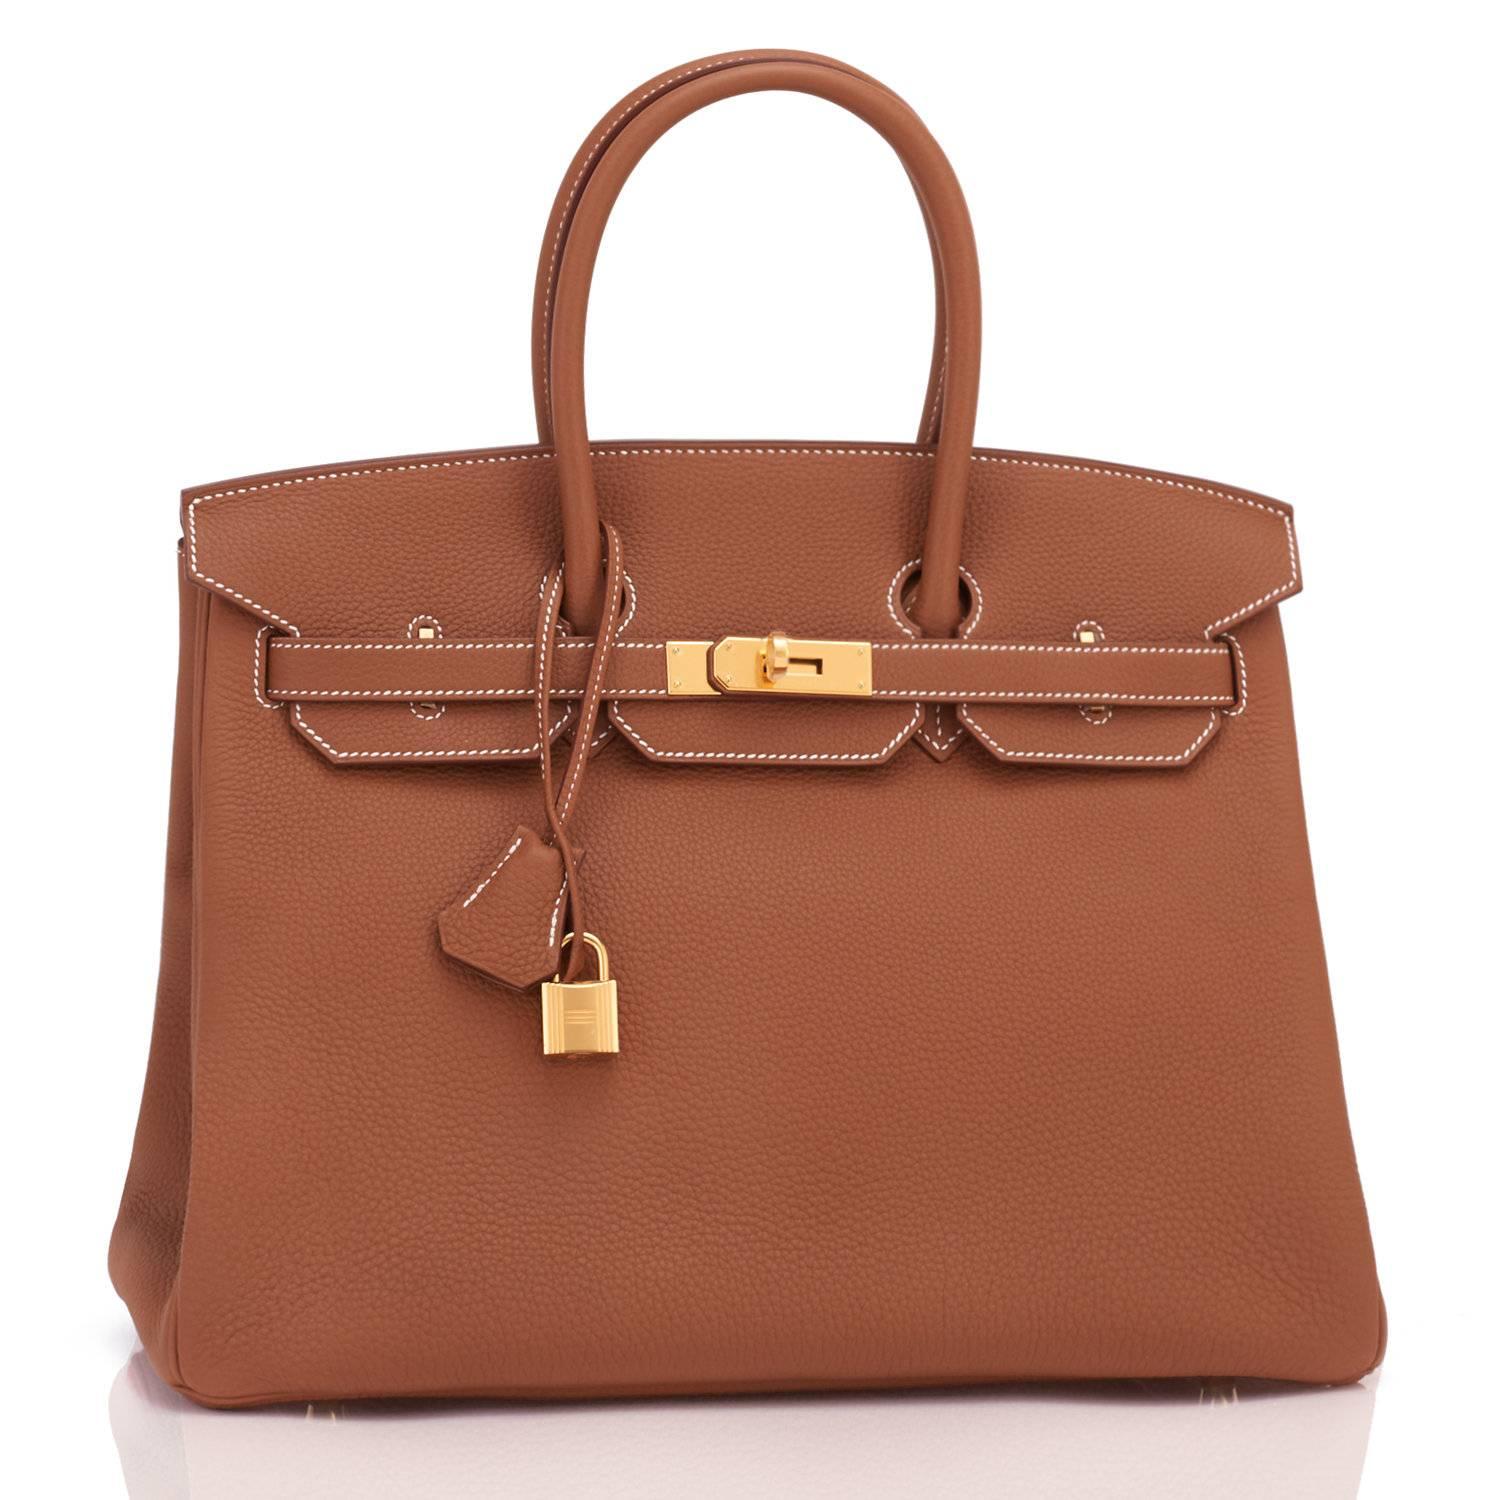 Women's or Men's Hermes Birkin 35 Gold Togo Camel Tan Gold Hardware Bag NEW